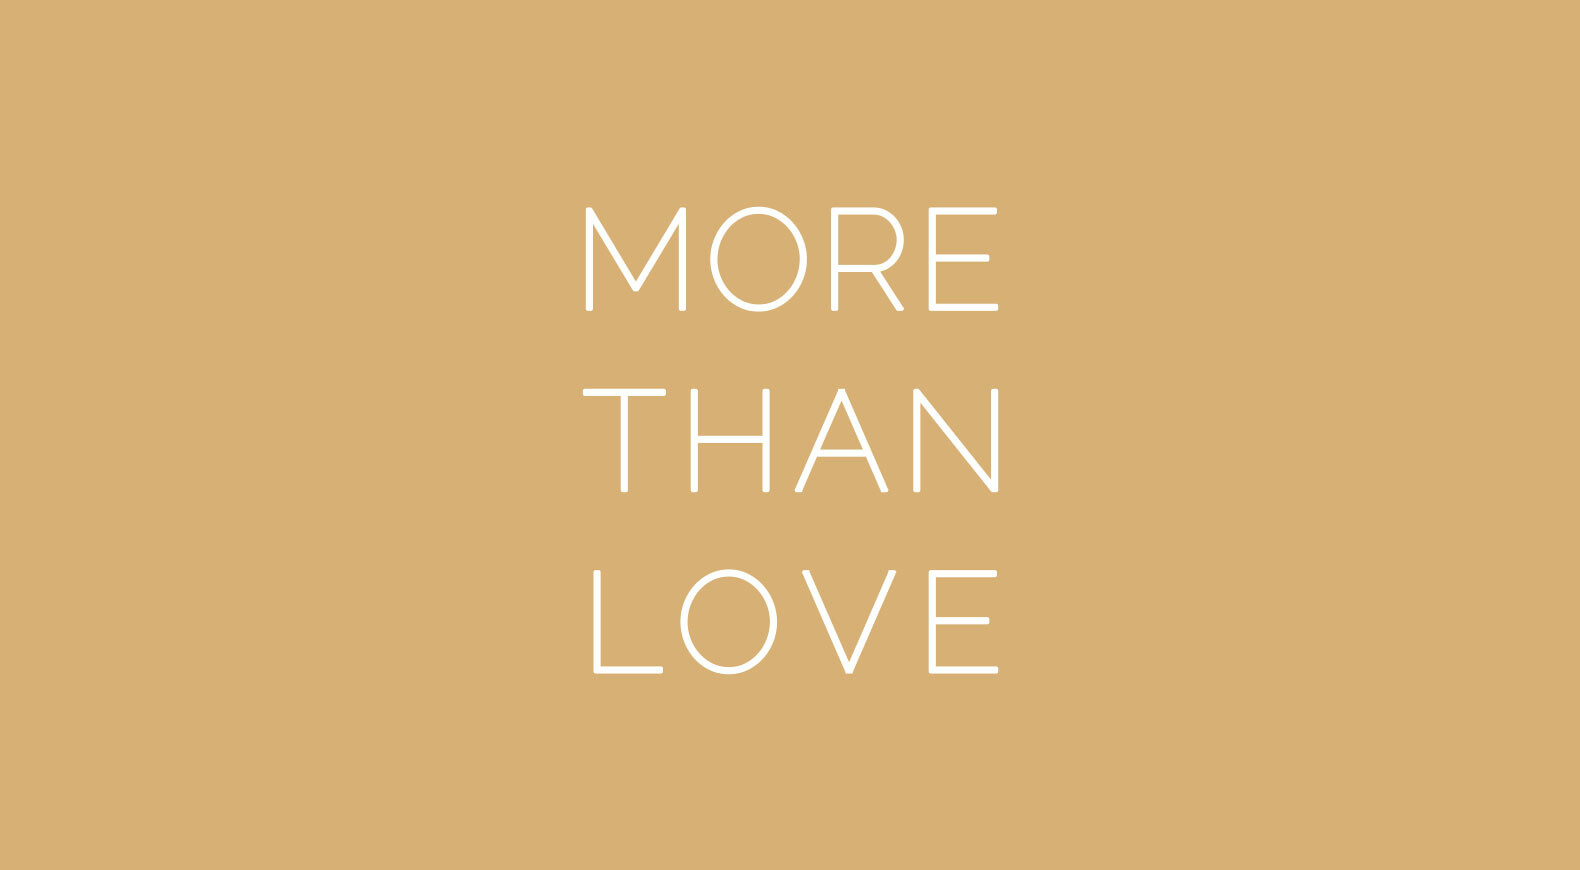 More than Love